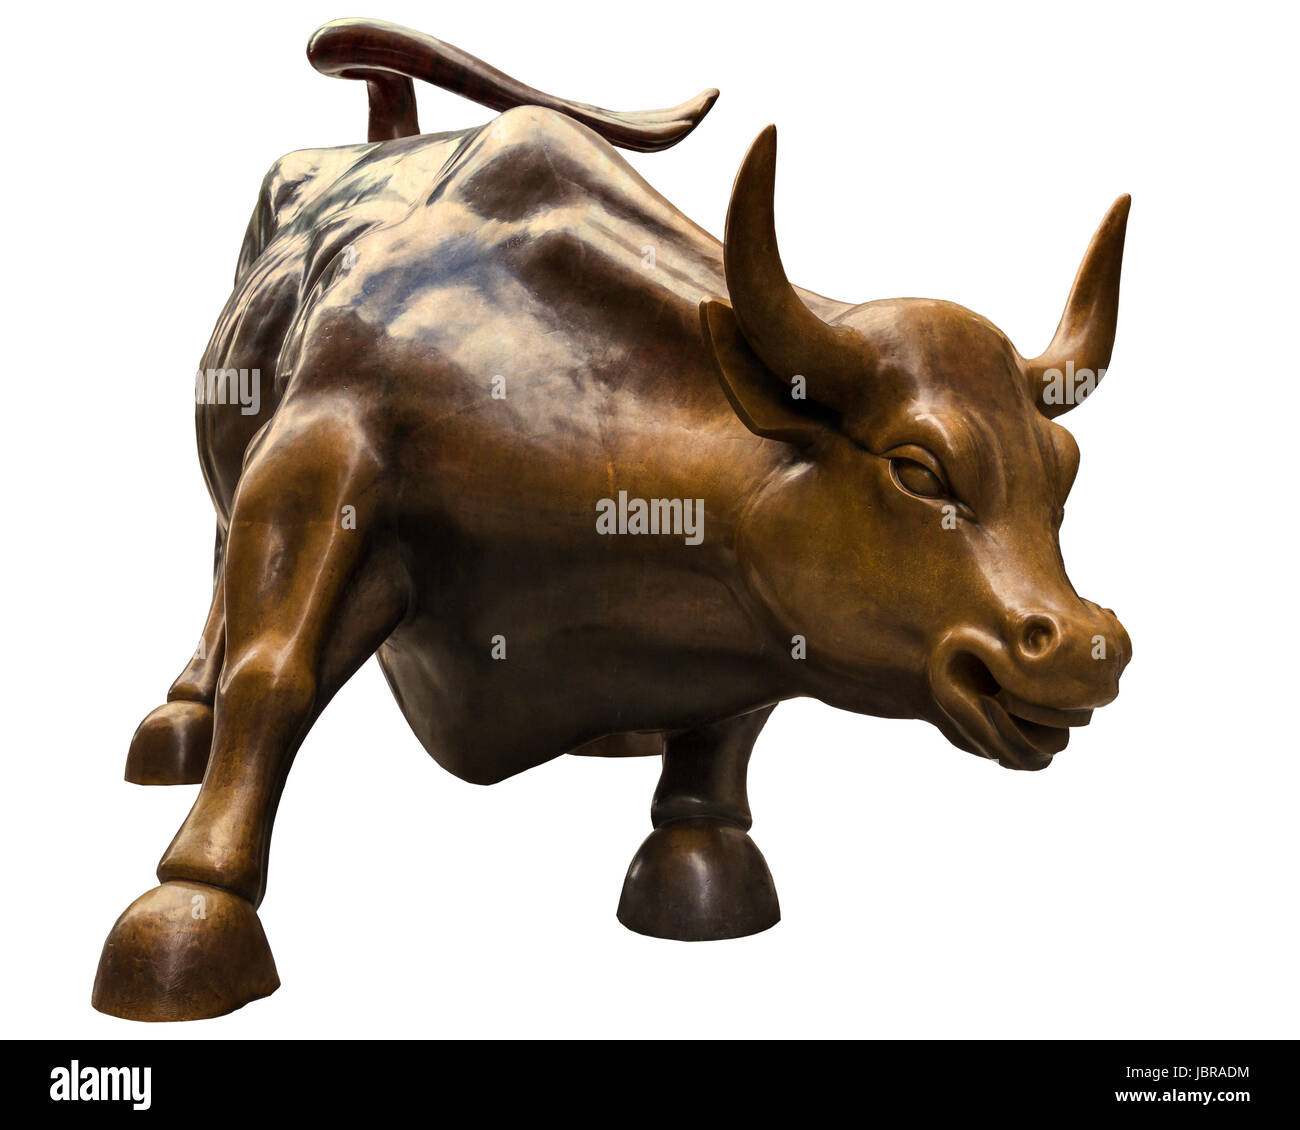 Carga de toro o el toro de Wall Street o Bowling Green Bull es una escultura de bronce de Arturo di Modica, que significa en Bowling Green Park, cerca de Wall Street en Manhattan, Ciudad de Nueva York. Foto de stock